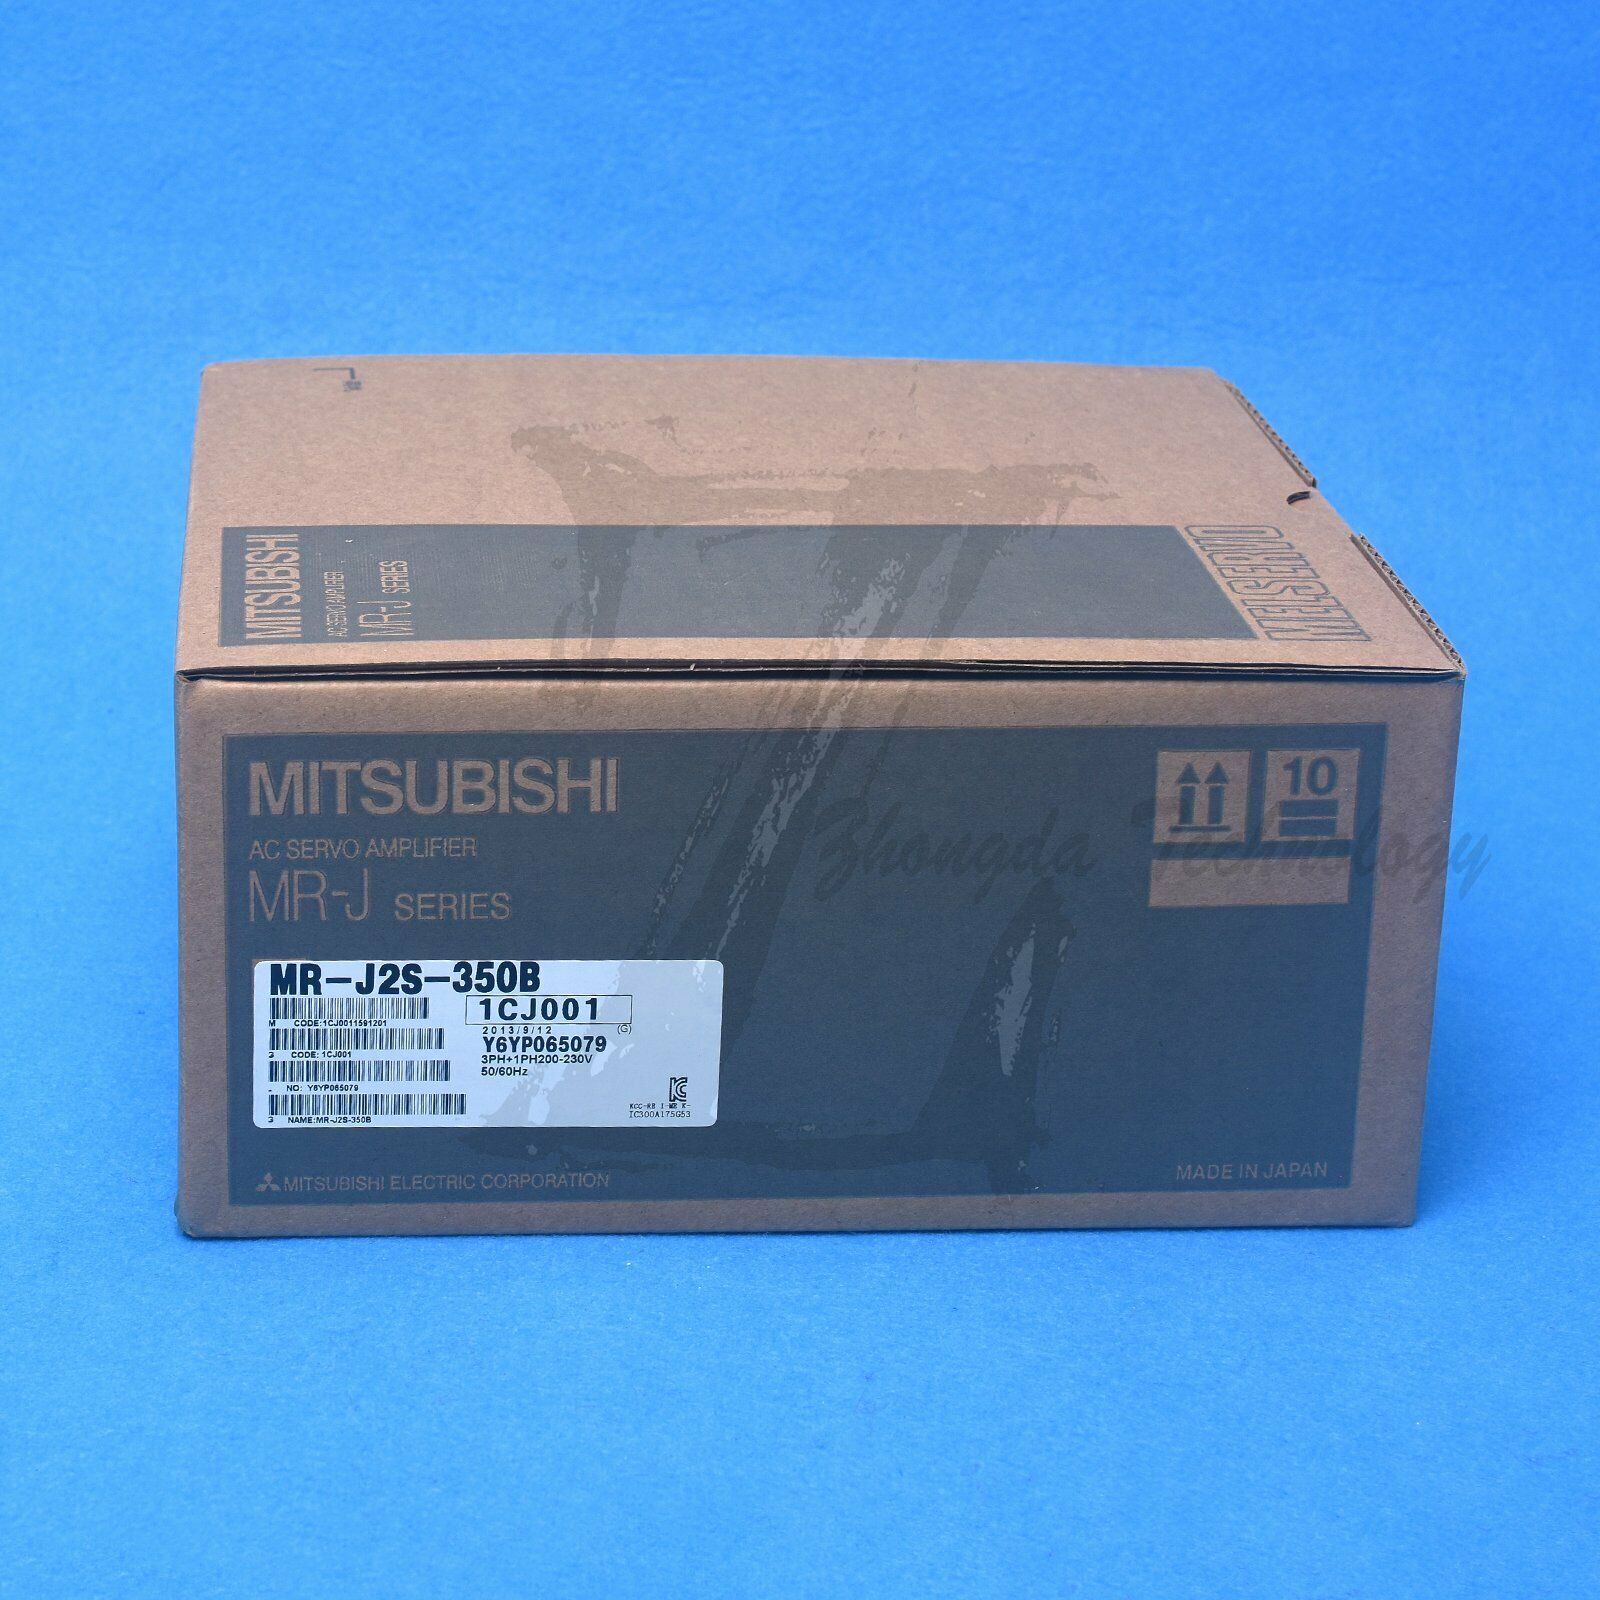 Mitsubishi 3.5kW Servo amplifier (SSCNET bus control) (200V 3-phase)MR-J2S-350B